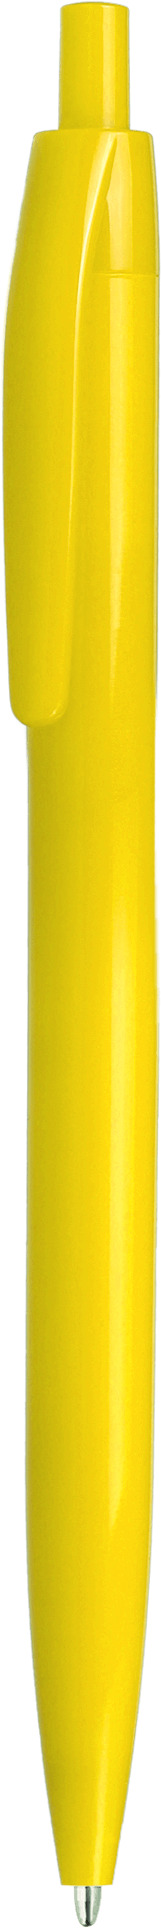 Ручка DAROM, однотонная, желтая